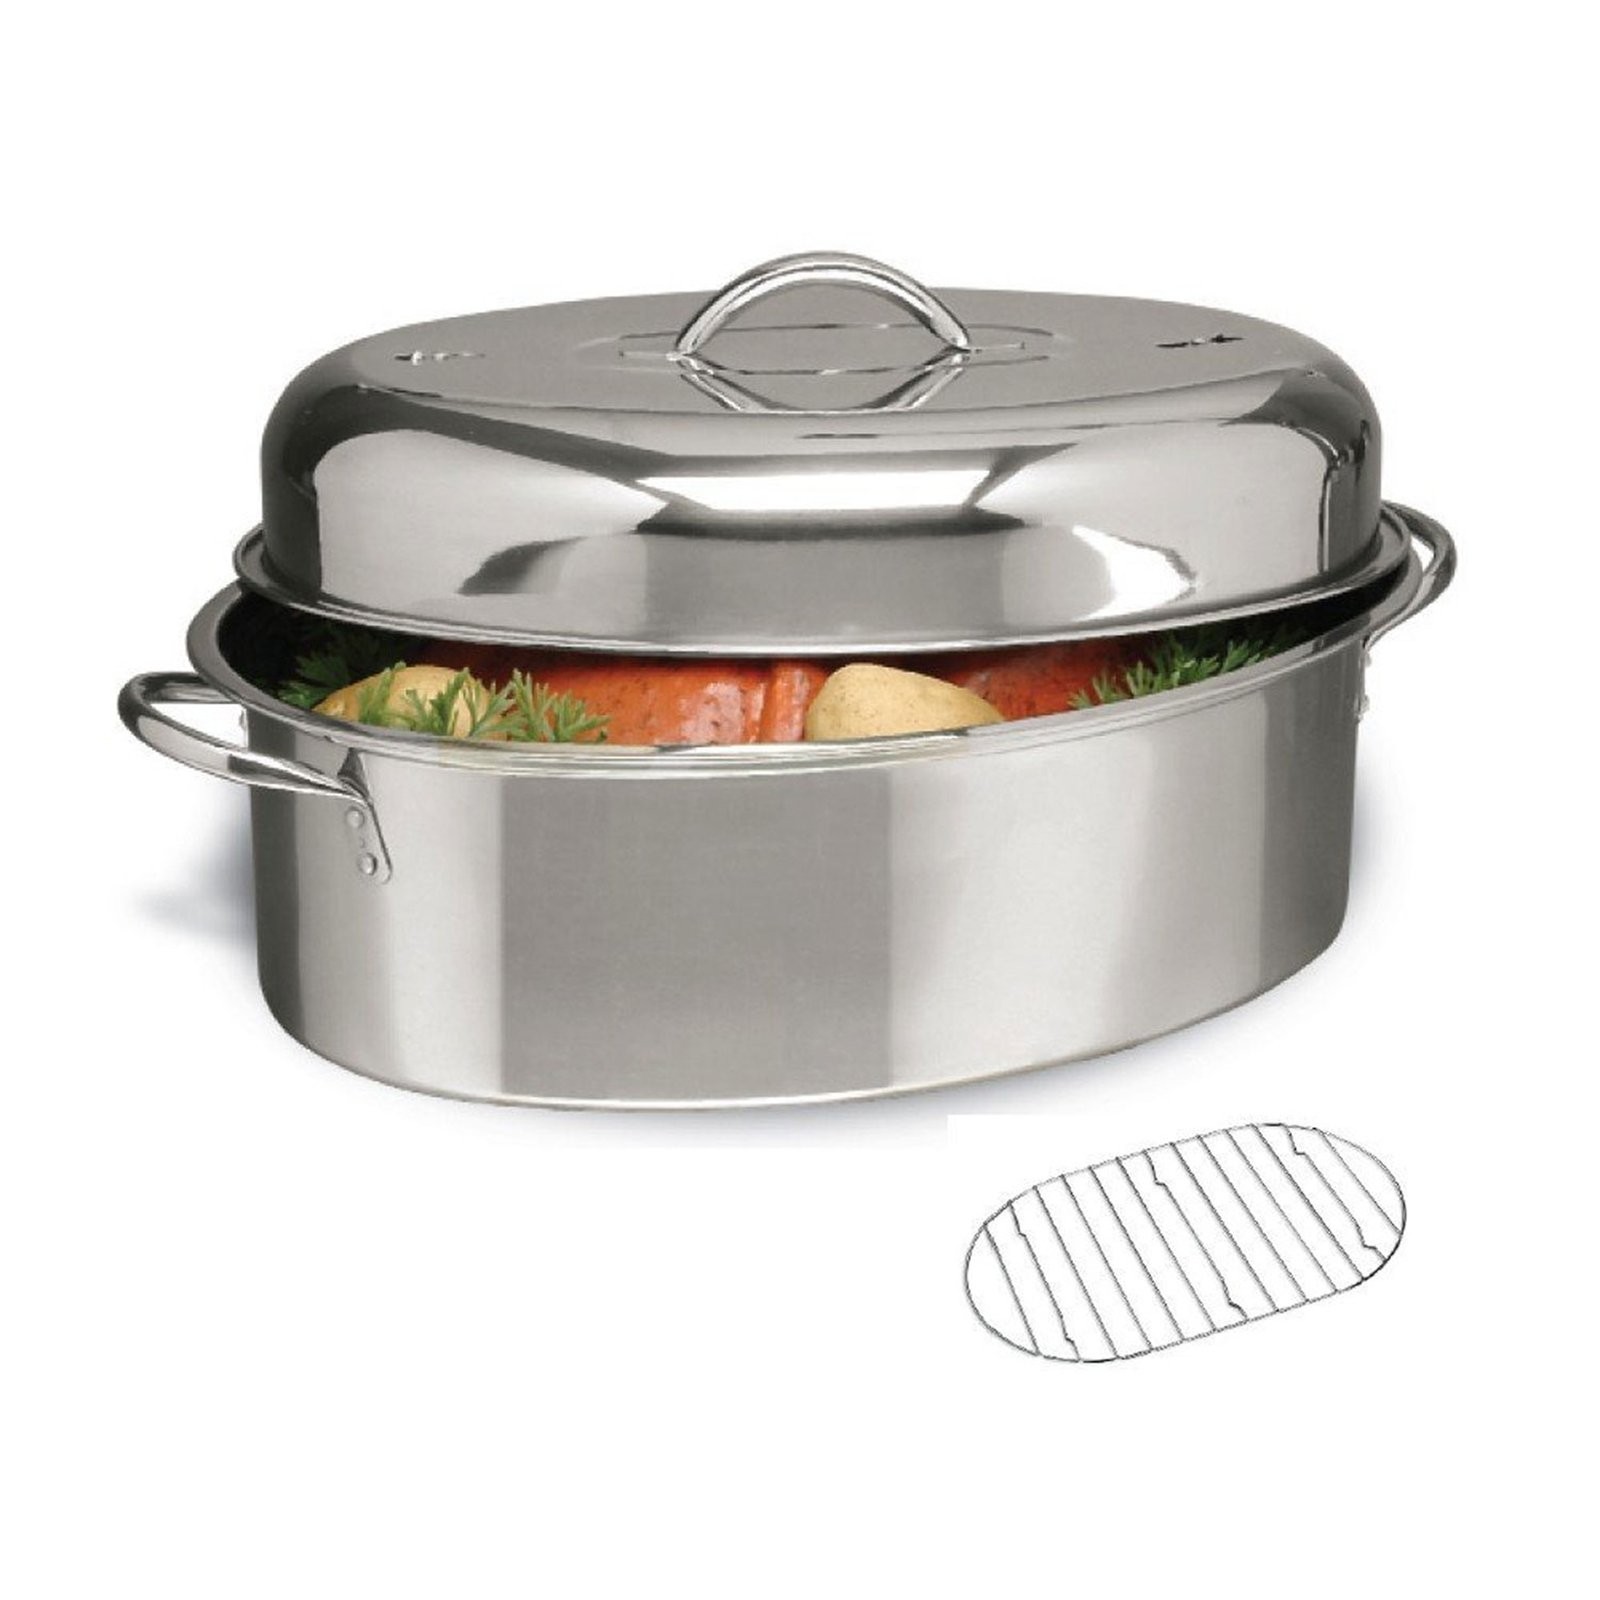 16 oval turkey roaster pan with lid roasting rack stainless